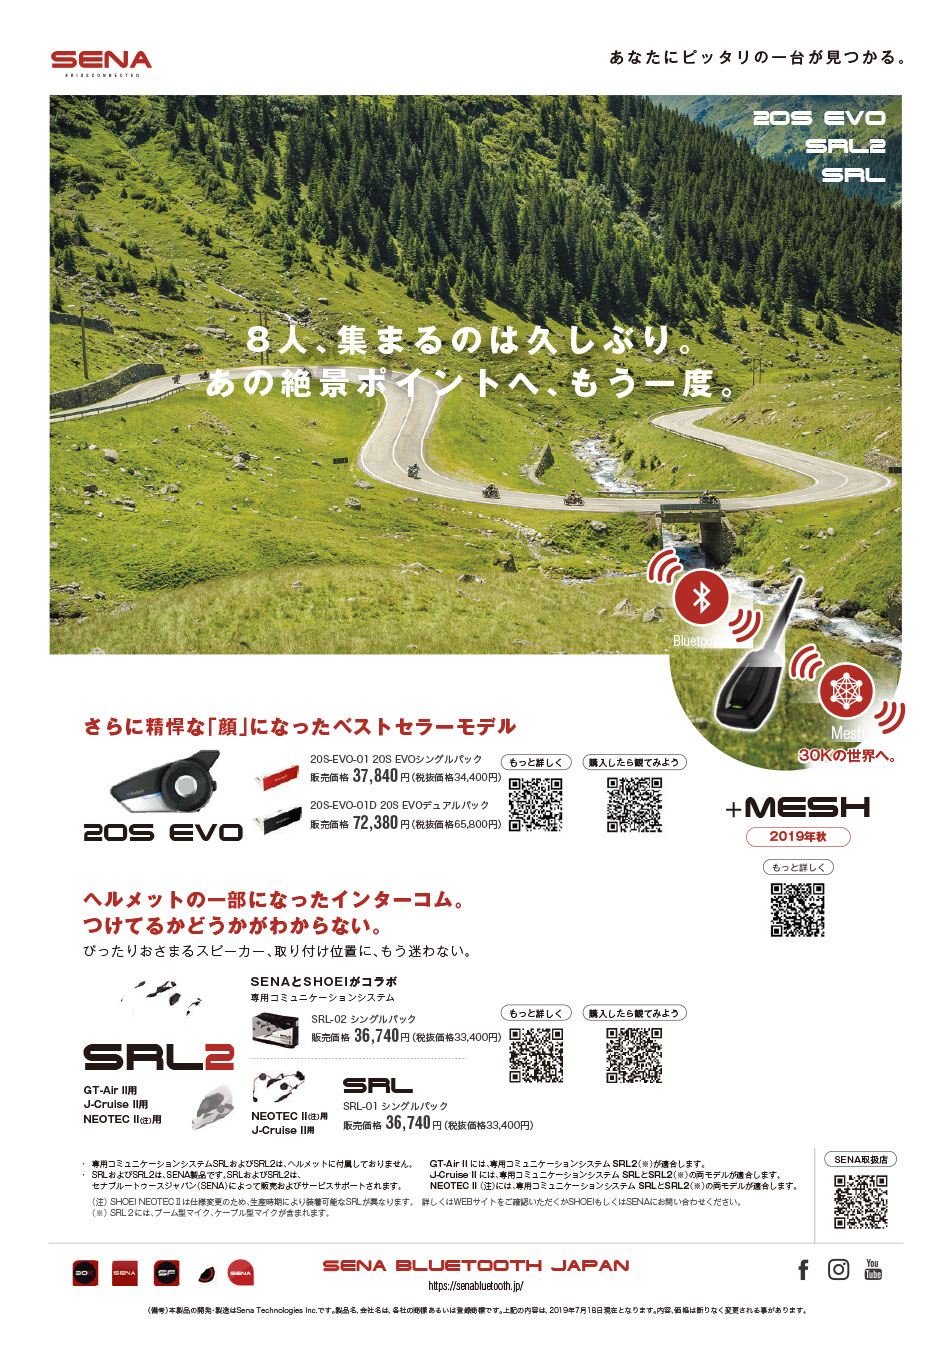 SENA Bluetooth Japan公式サイト   SRL2   製品概要